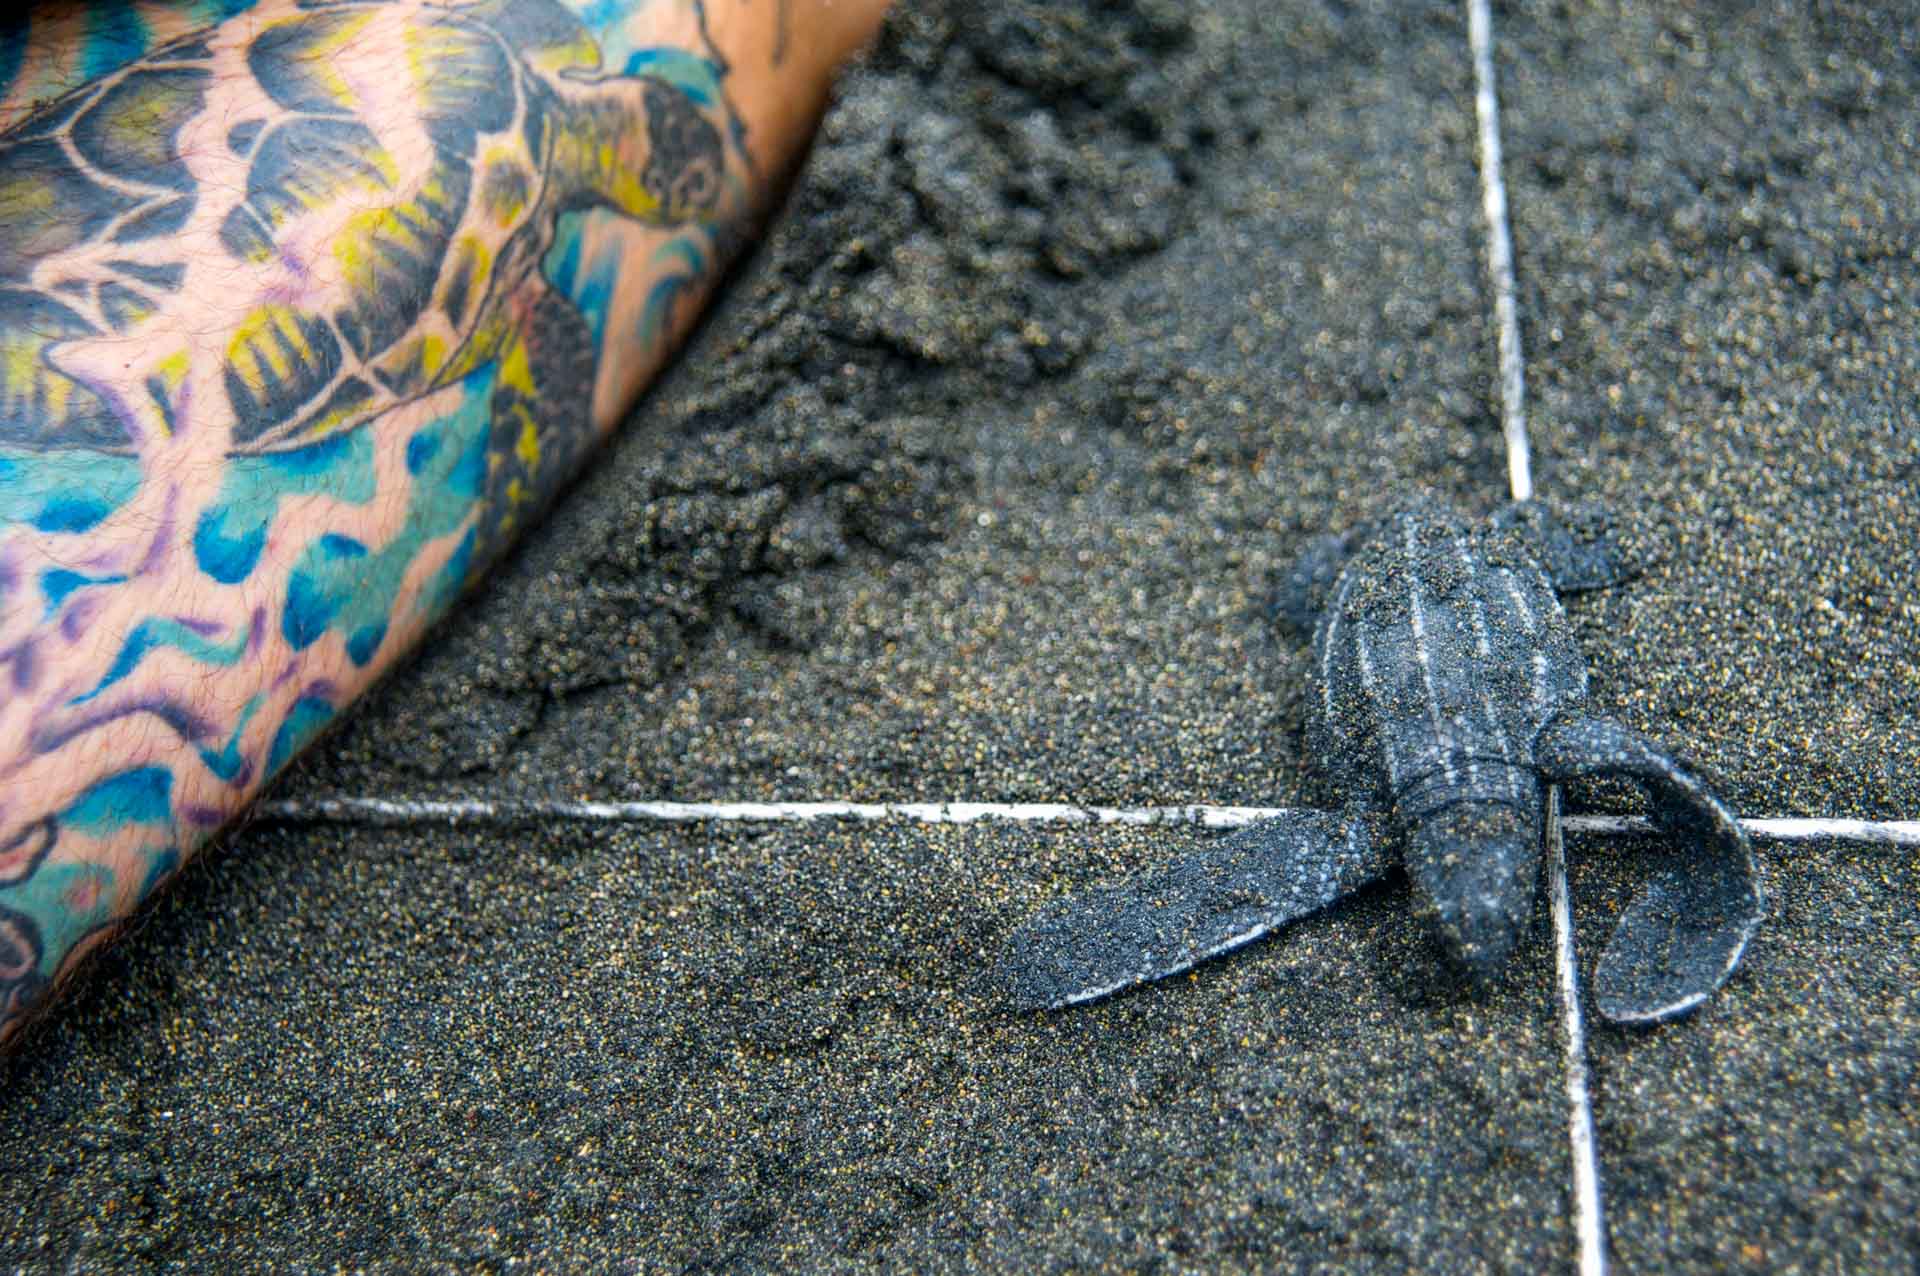 Leatherback sea turtle hatchling in hatchery. Dermochelys coriacea. Gandoca, Costa Rica.